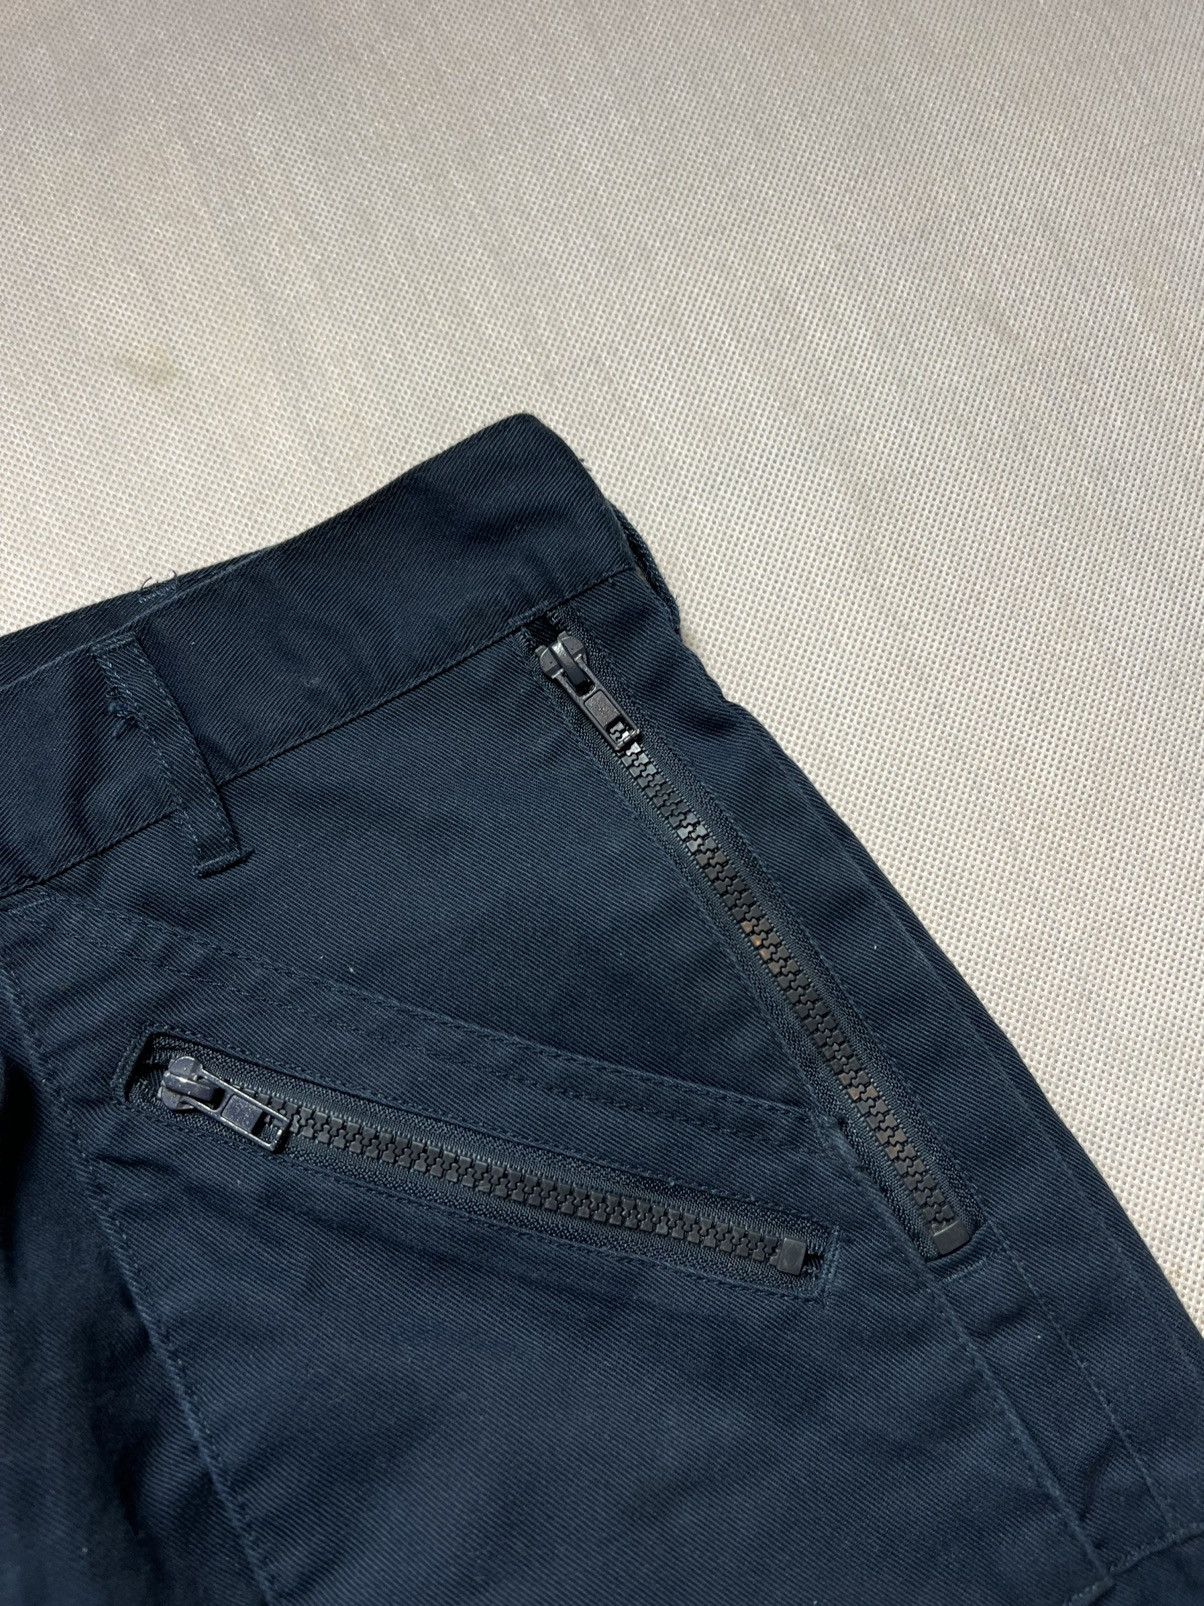 Vintage Trousers Dickies vintage navy pocket Size US 34 / EU 50 - 5 Thumbnail